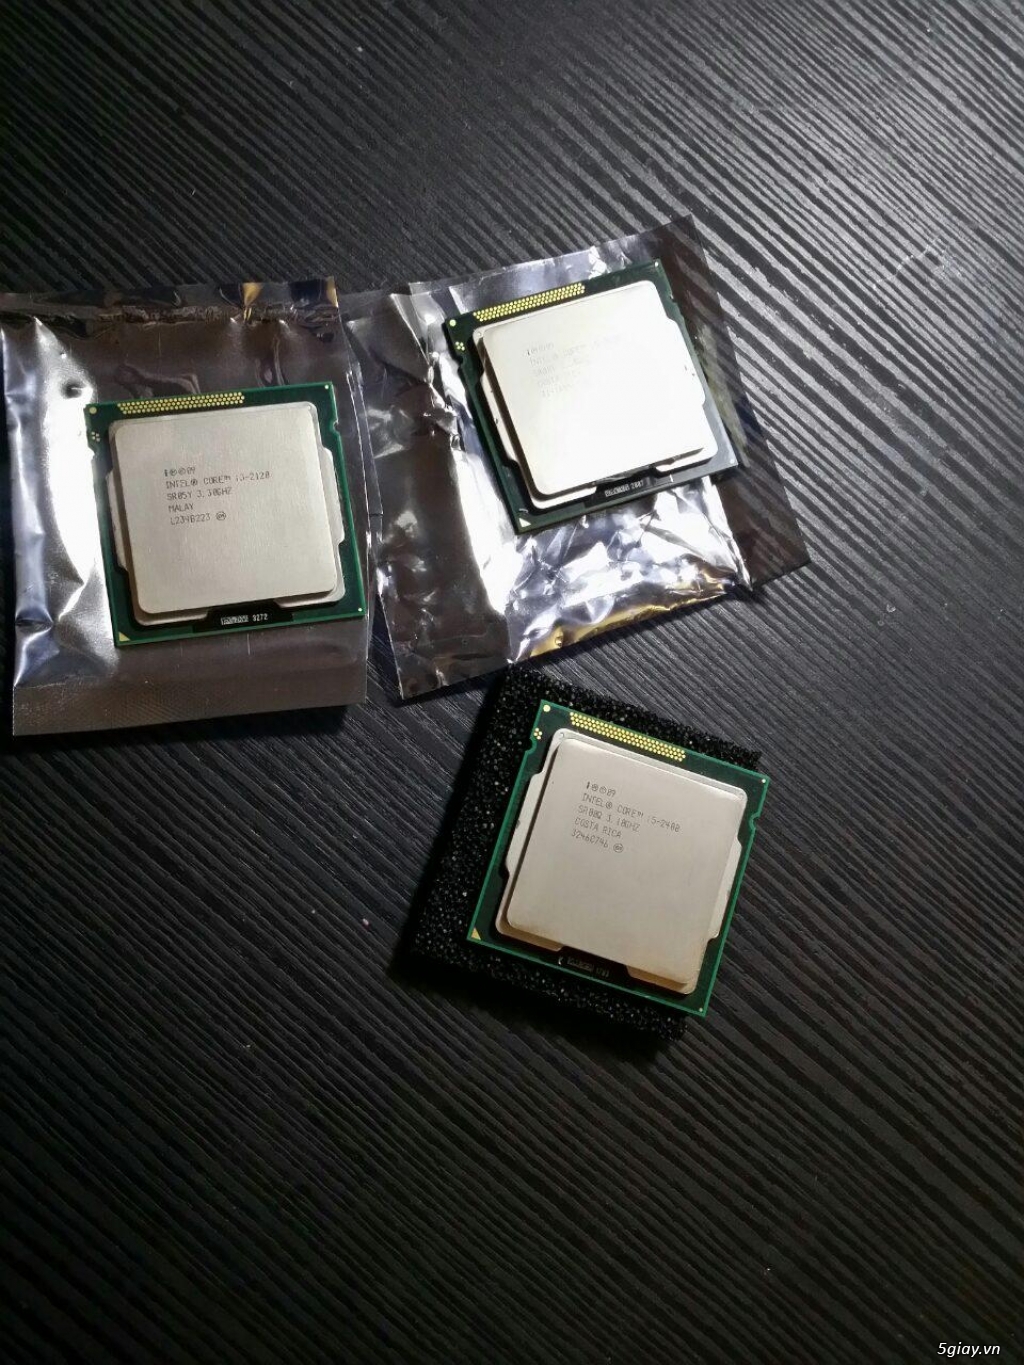 3 Con CPU Core i3 2120, i5 2500, i5 2400 (bán cả 3)